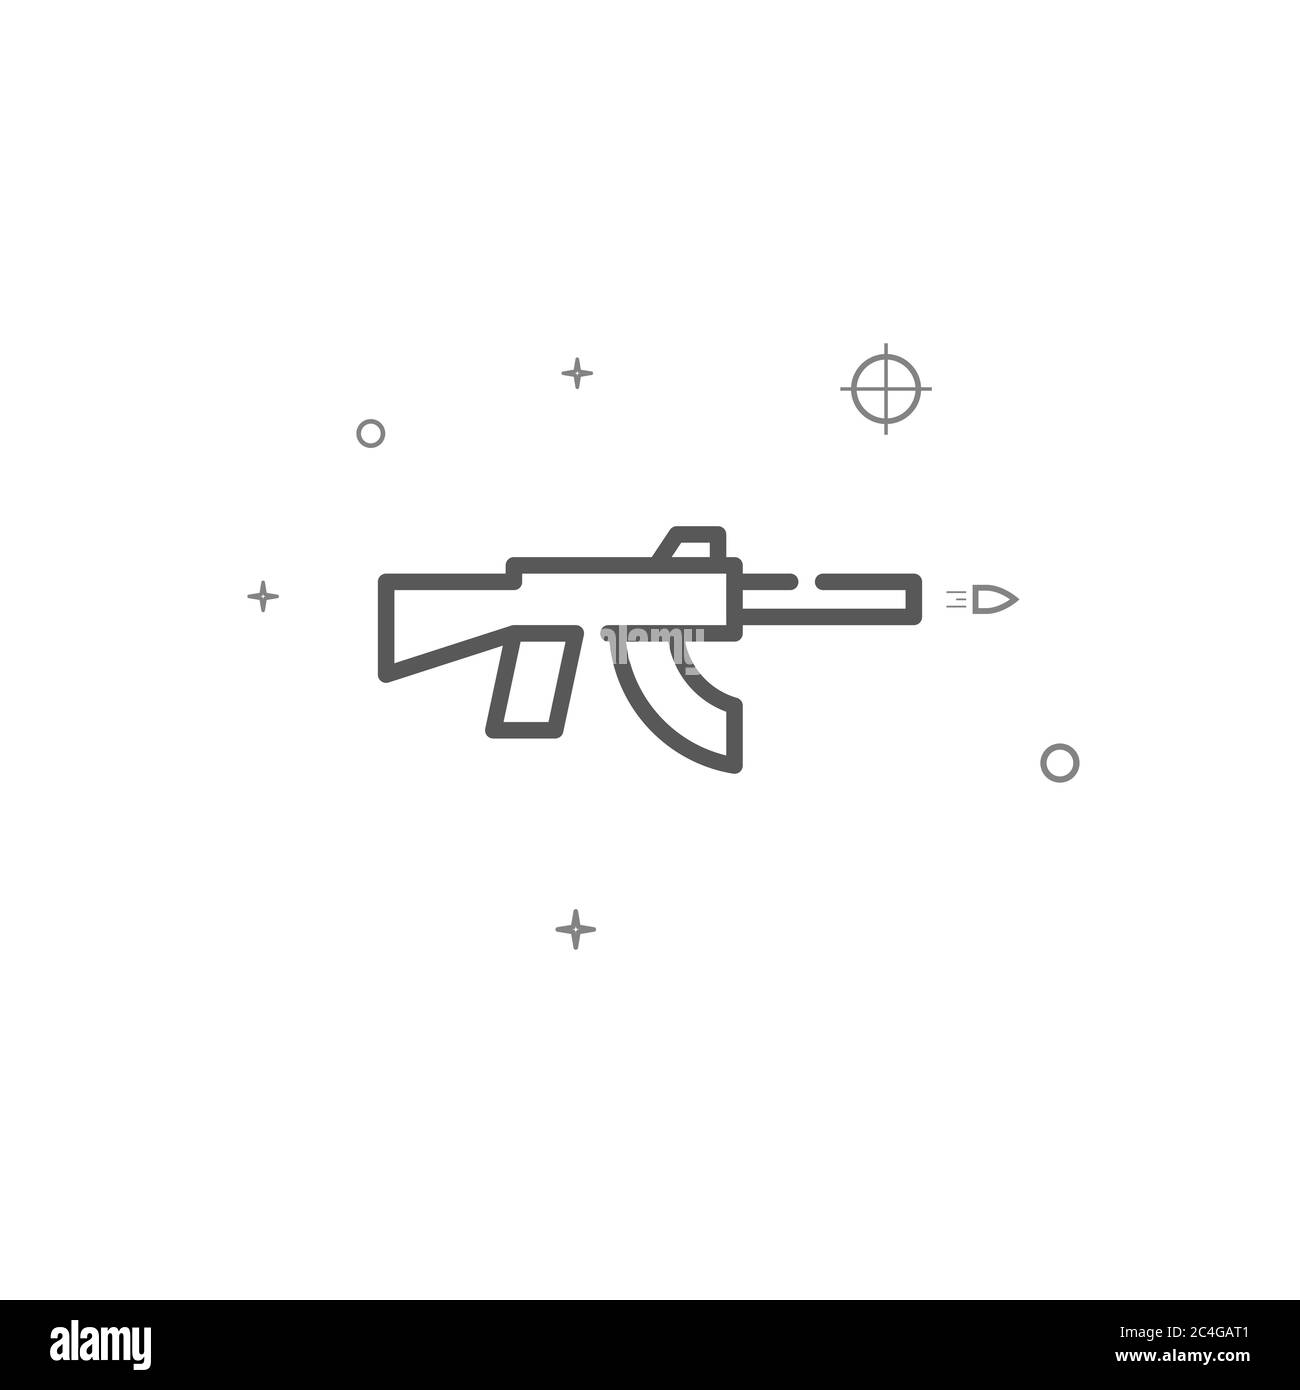 Kalashnikov assault rifle simple line icon. Weapons symbol, pictogram, sign. Light background. Stock Photo